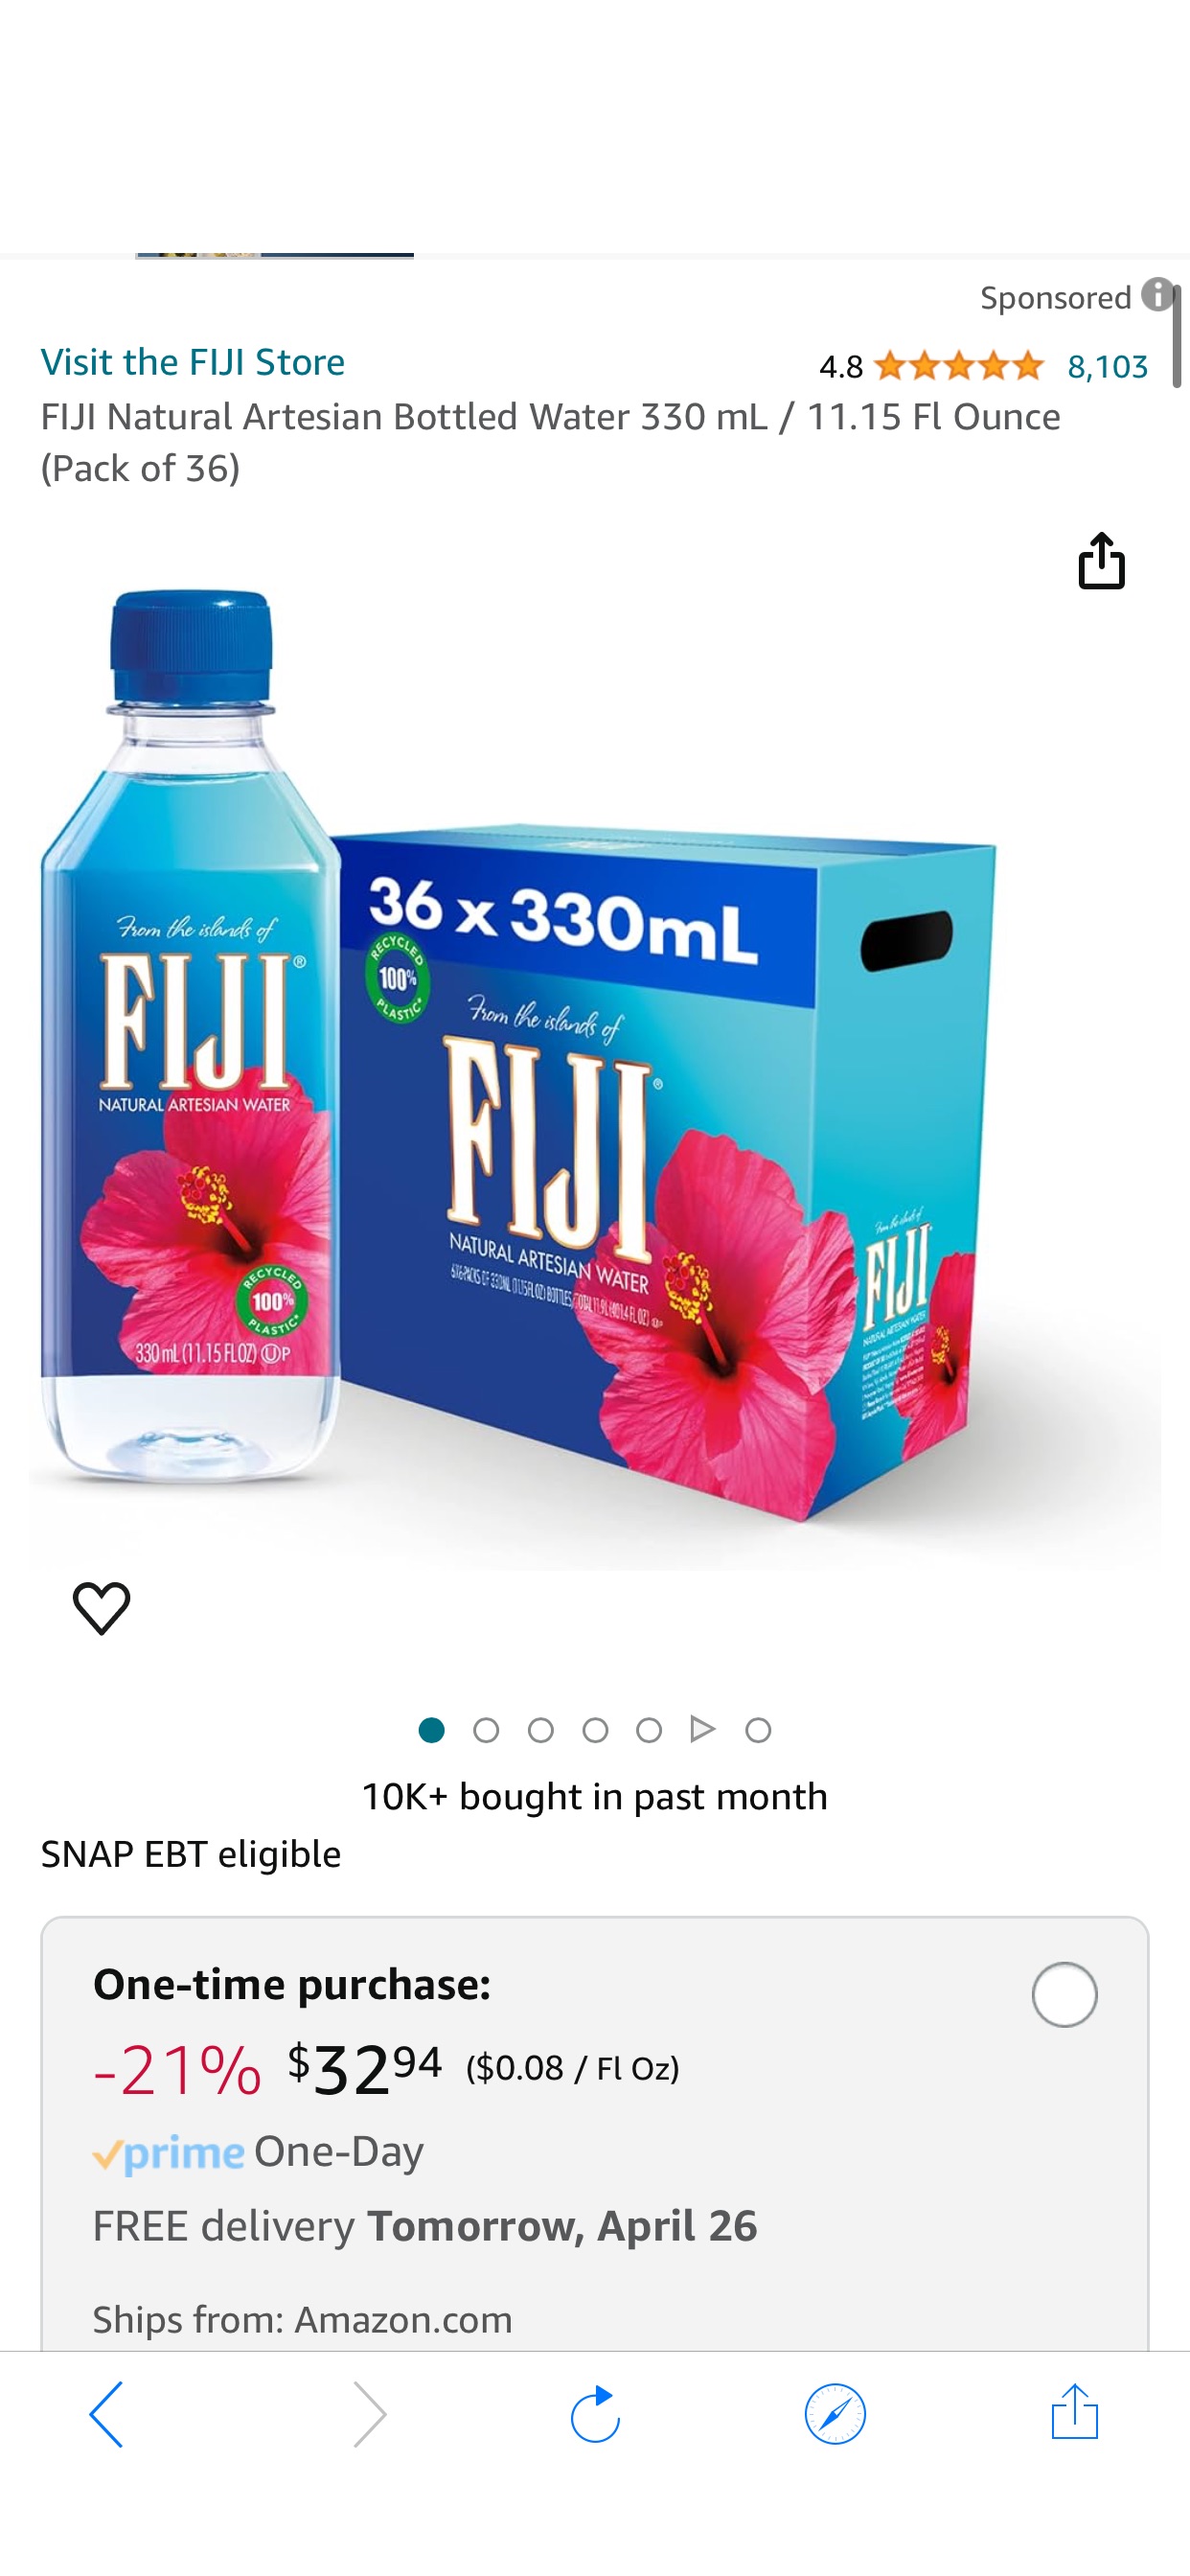 Amazon.com: FIJI Natural Artesian Bottled Water 330 mL / 11.15 Fl Ounce (Pack of 36) : Grocery & Gourmet Food 斐济水36瓶 每瓶不到$1